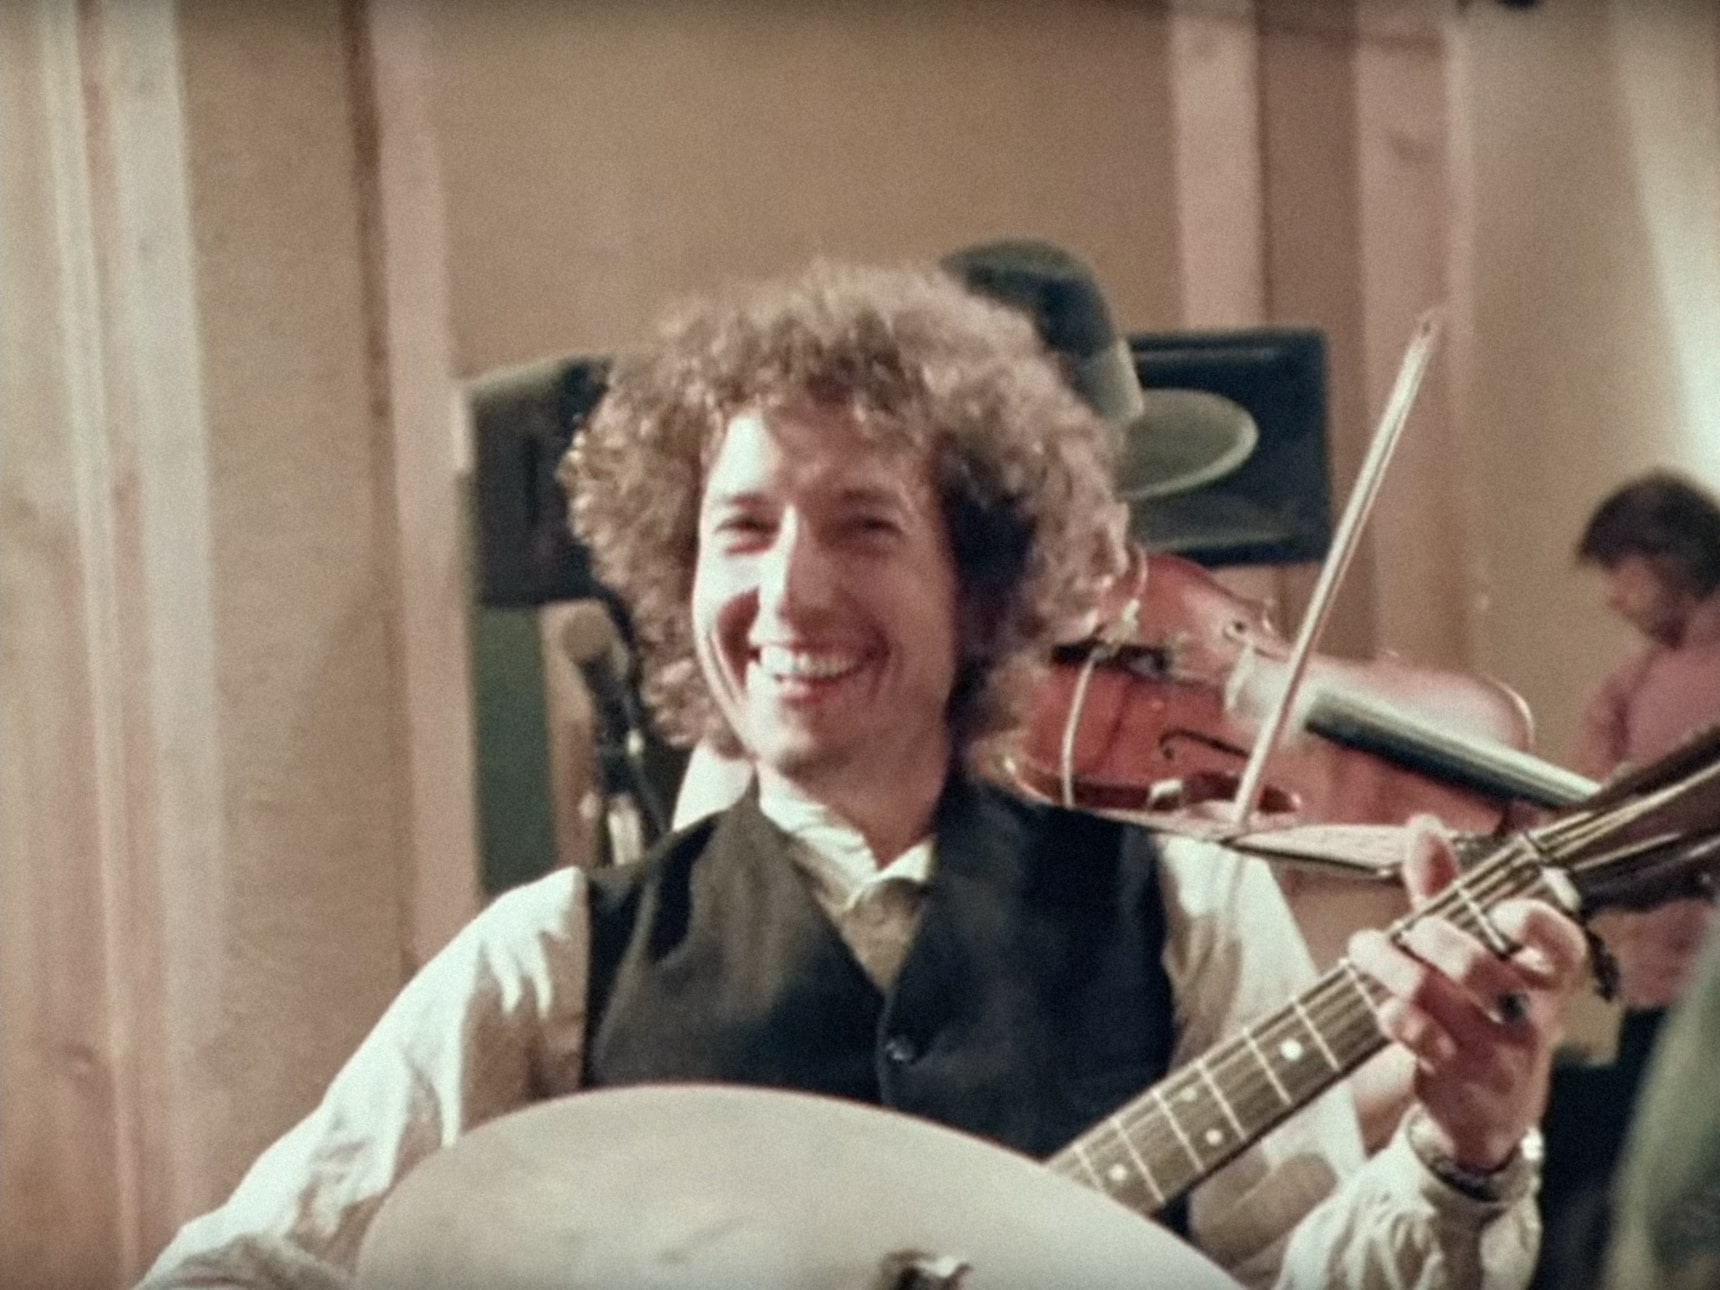 ROLLING THUNDER REVUE: A BOB DYLAN STORY BY MARTIN SCORSESE, Bob Dylan, Scarlet Rivera (playing violin, behind him), 2019